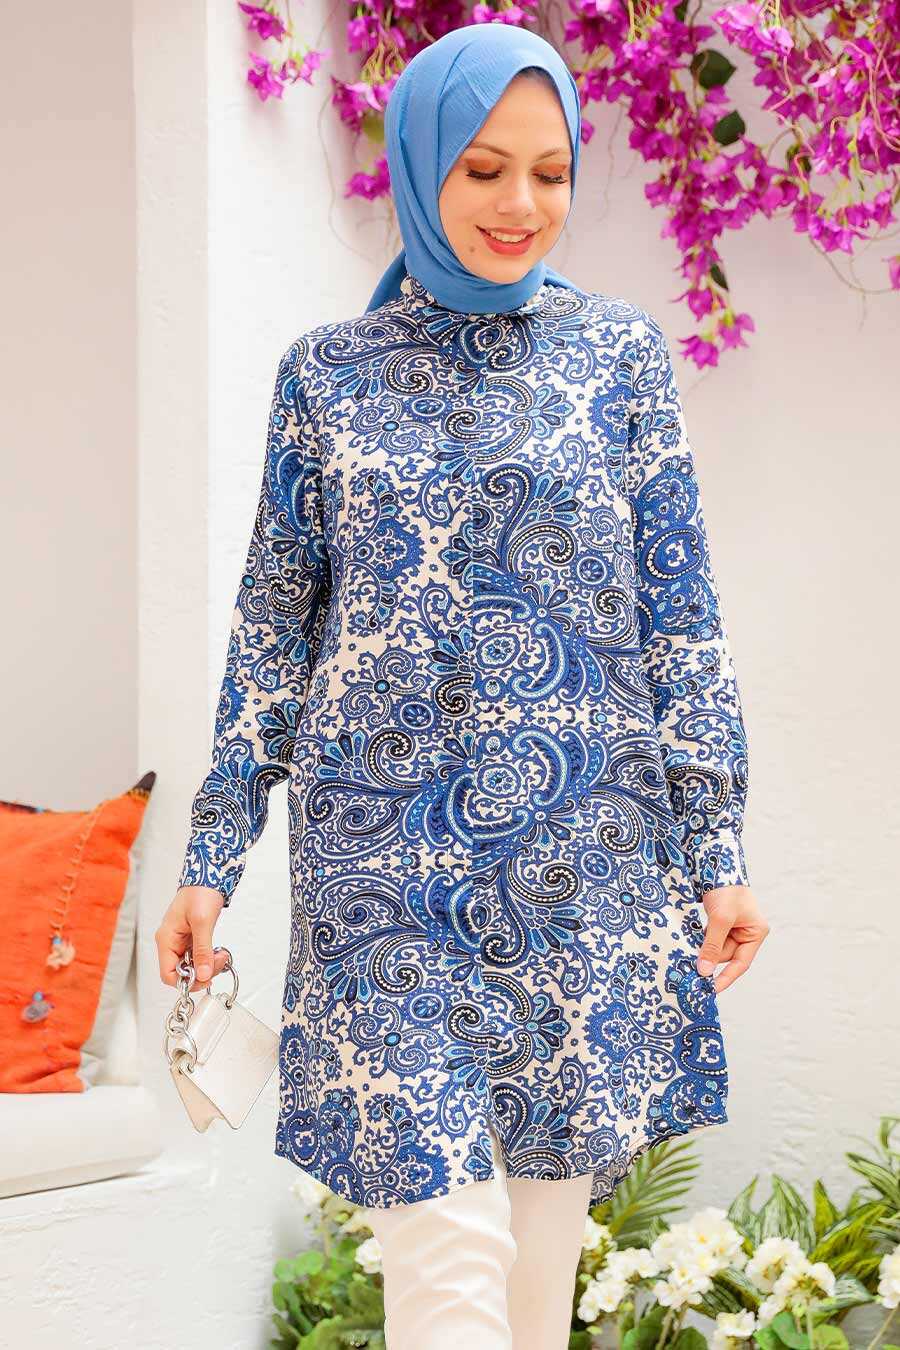 İndigo Blue Hijab Tunic 11524IM - Neva-style.com